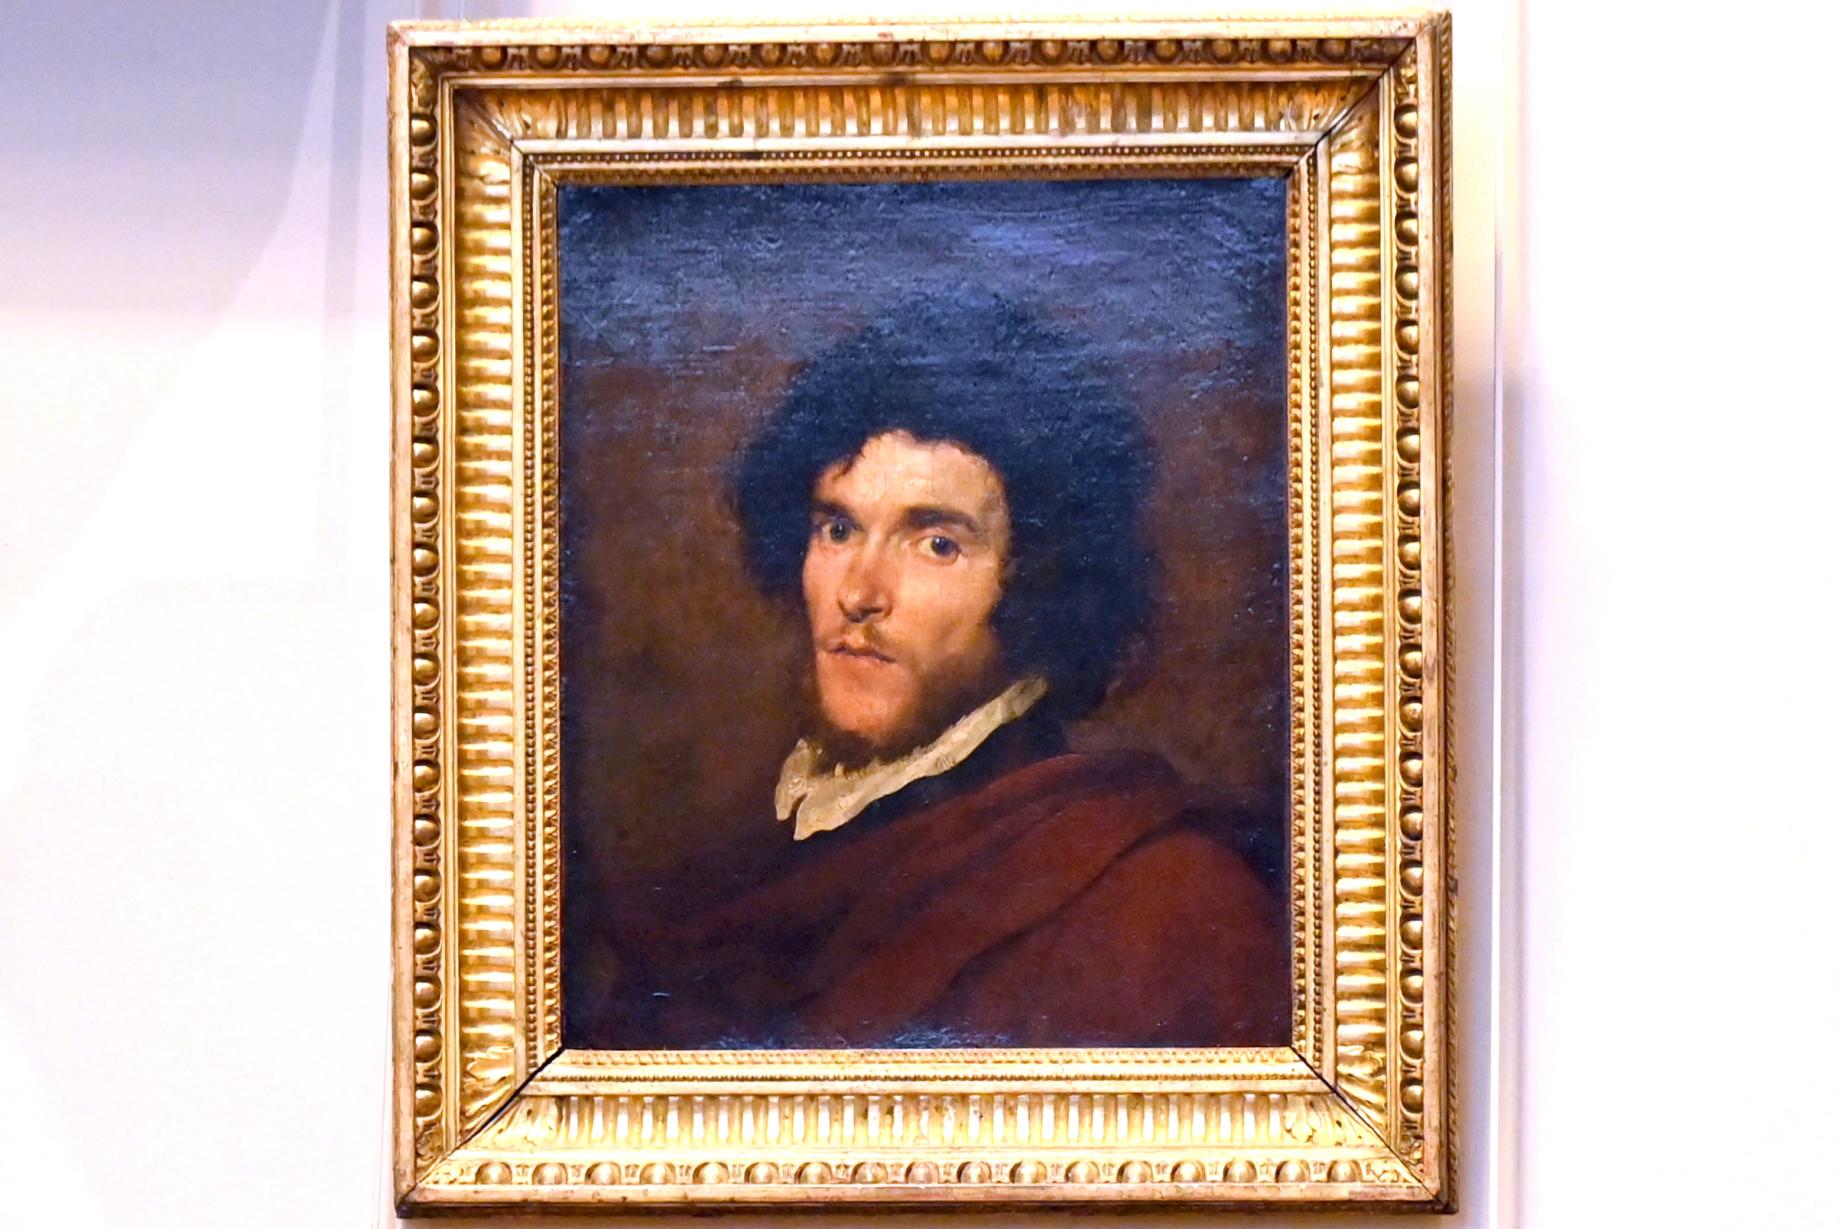 Halbfiguriges Porträt eines Mannes, Paris, Musée du Louvre, Saal 728, um 1630–1650, Bild 1/2